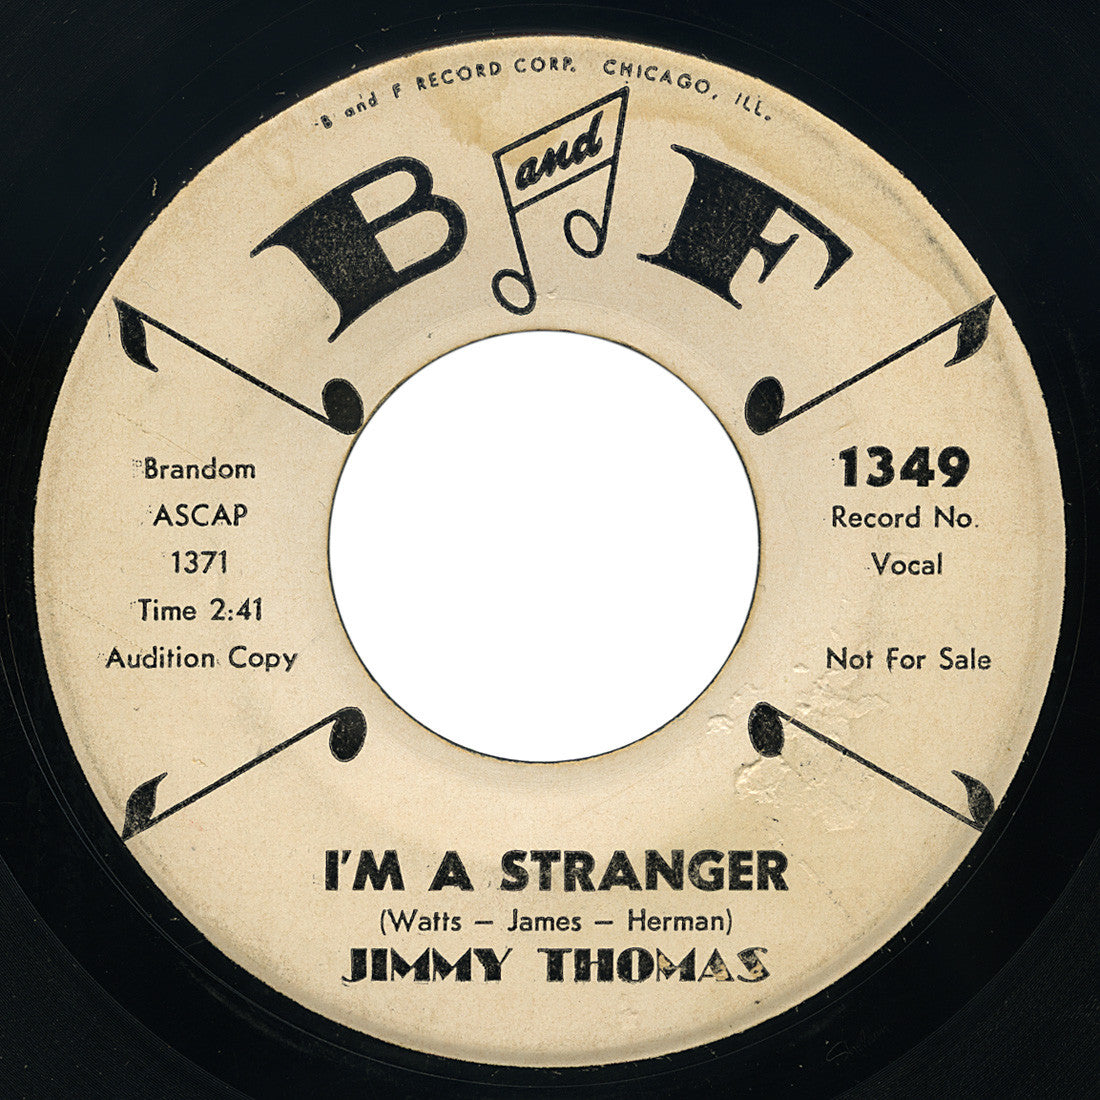 Jimmy Thomas – I’m A Stranger – B and F